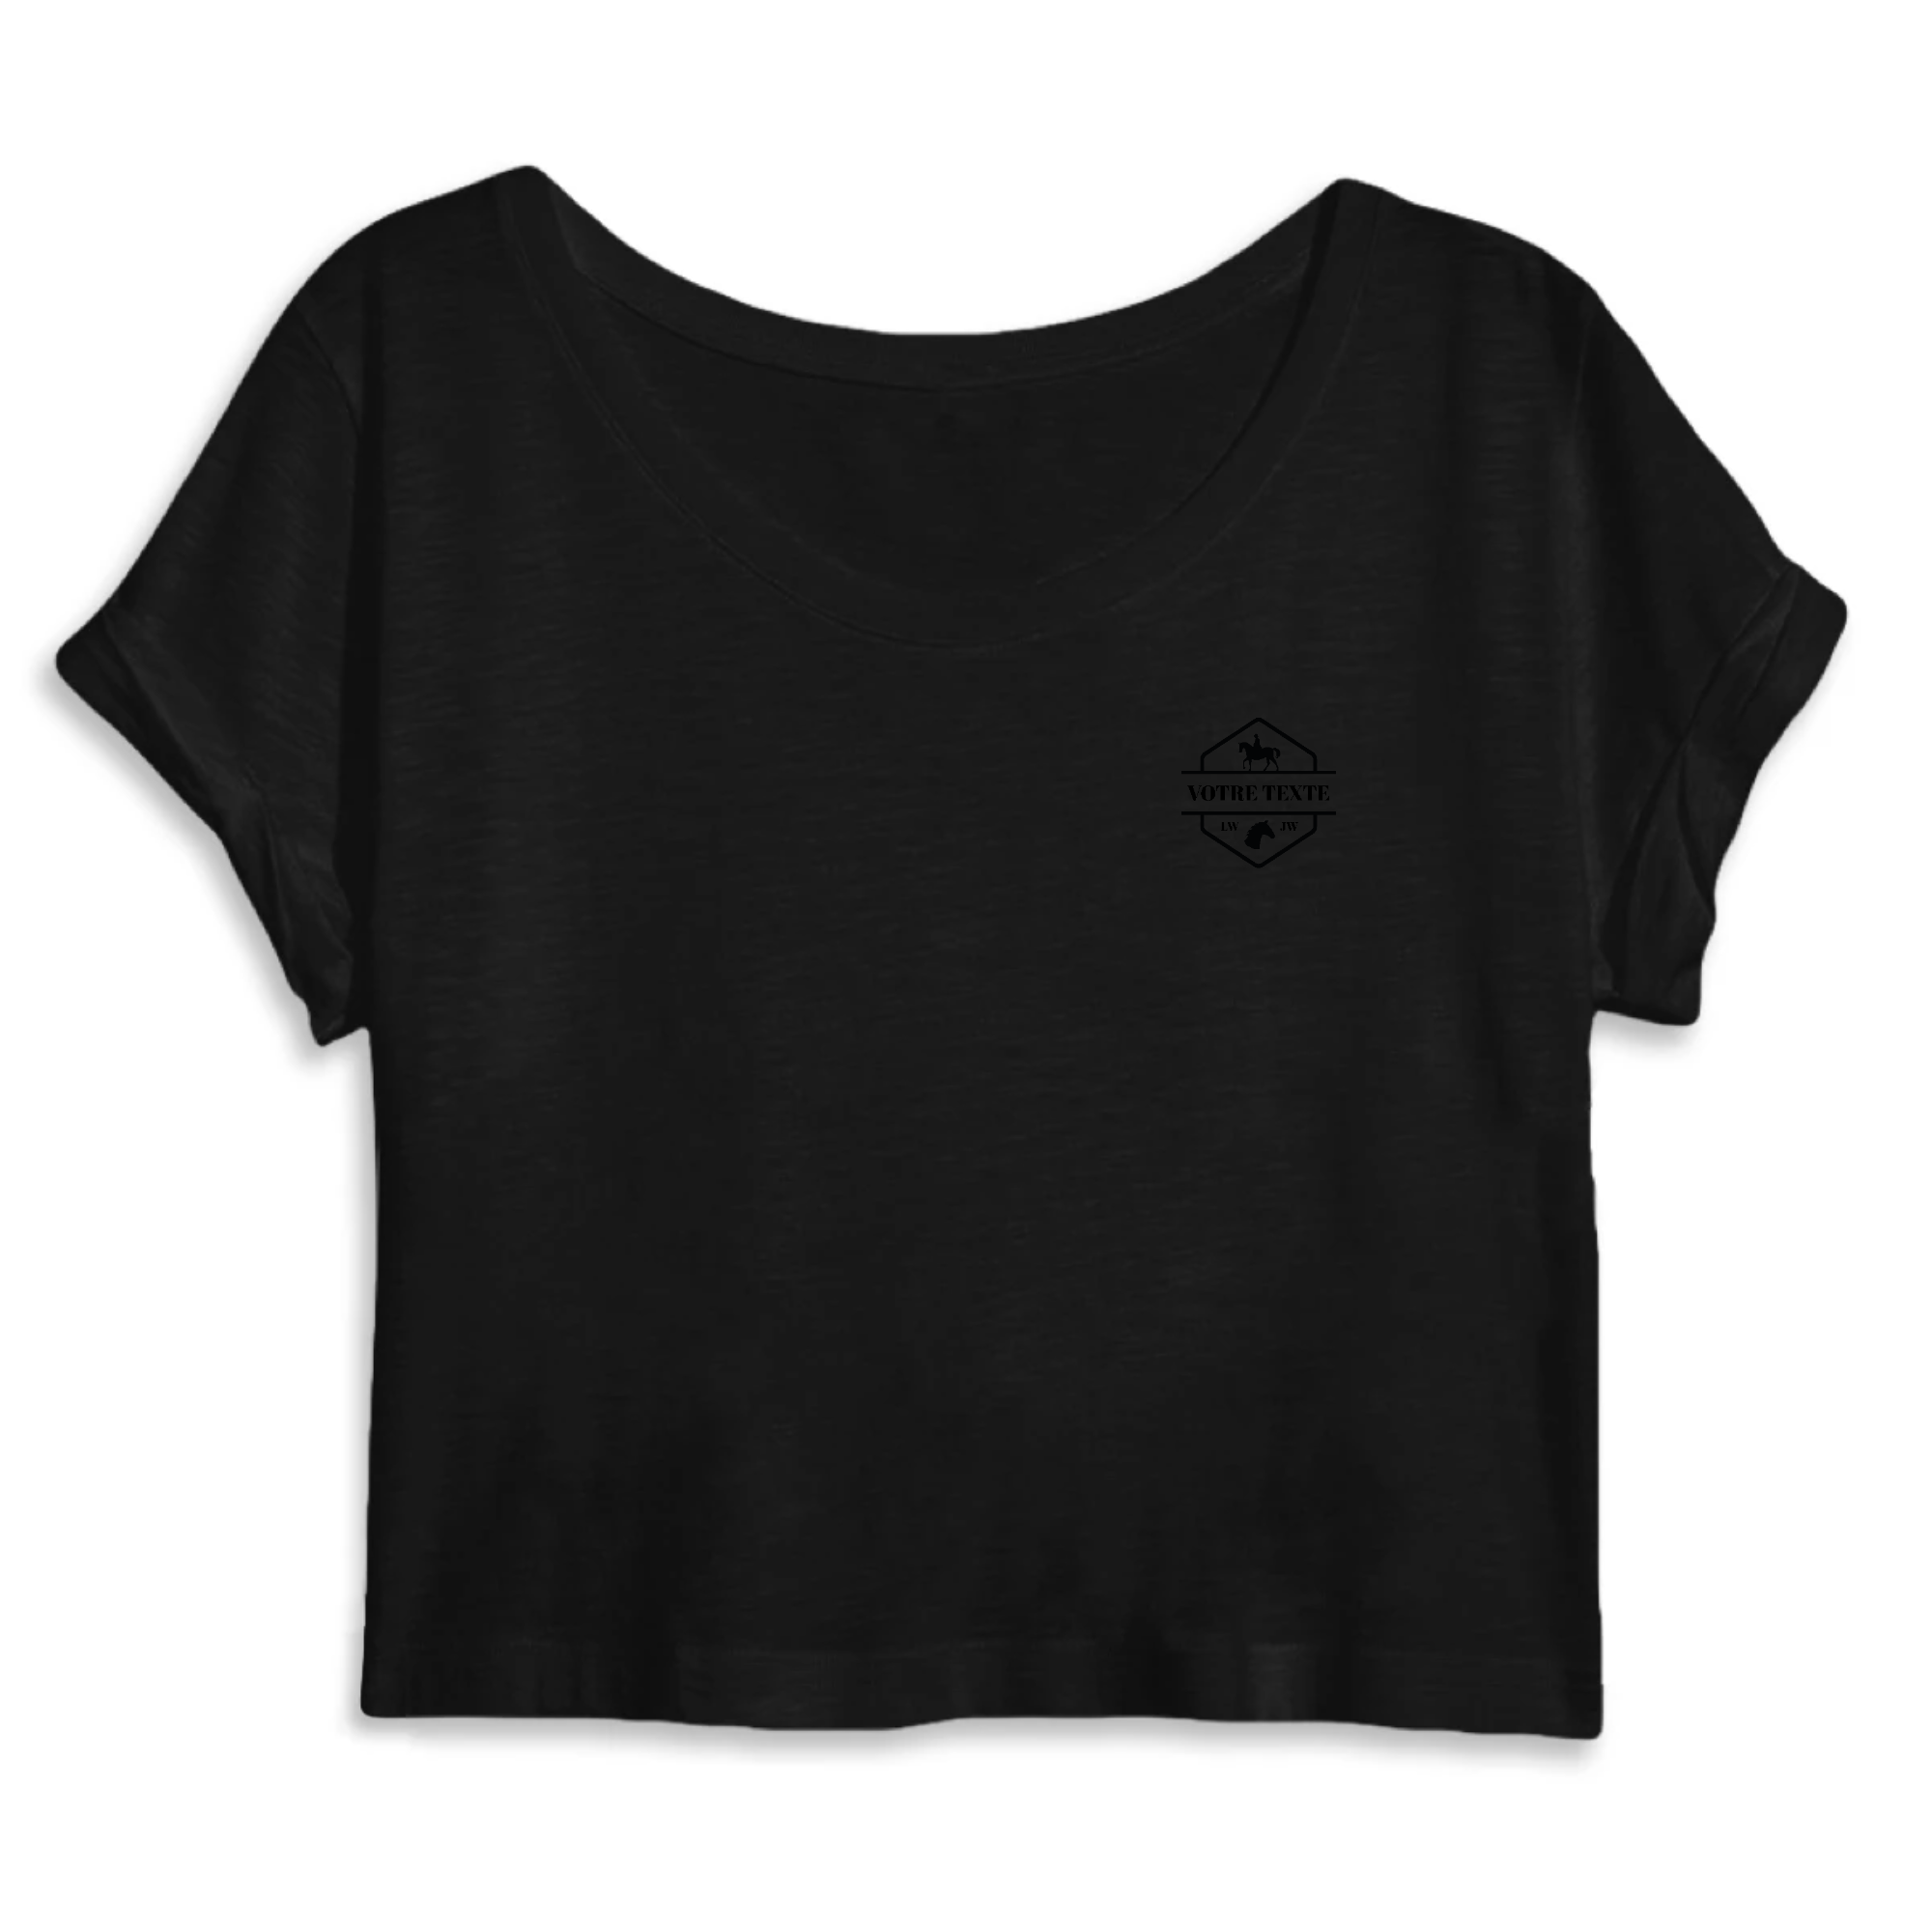 Ecusson 1 crop top t-shirt